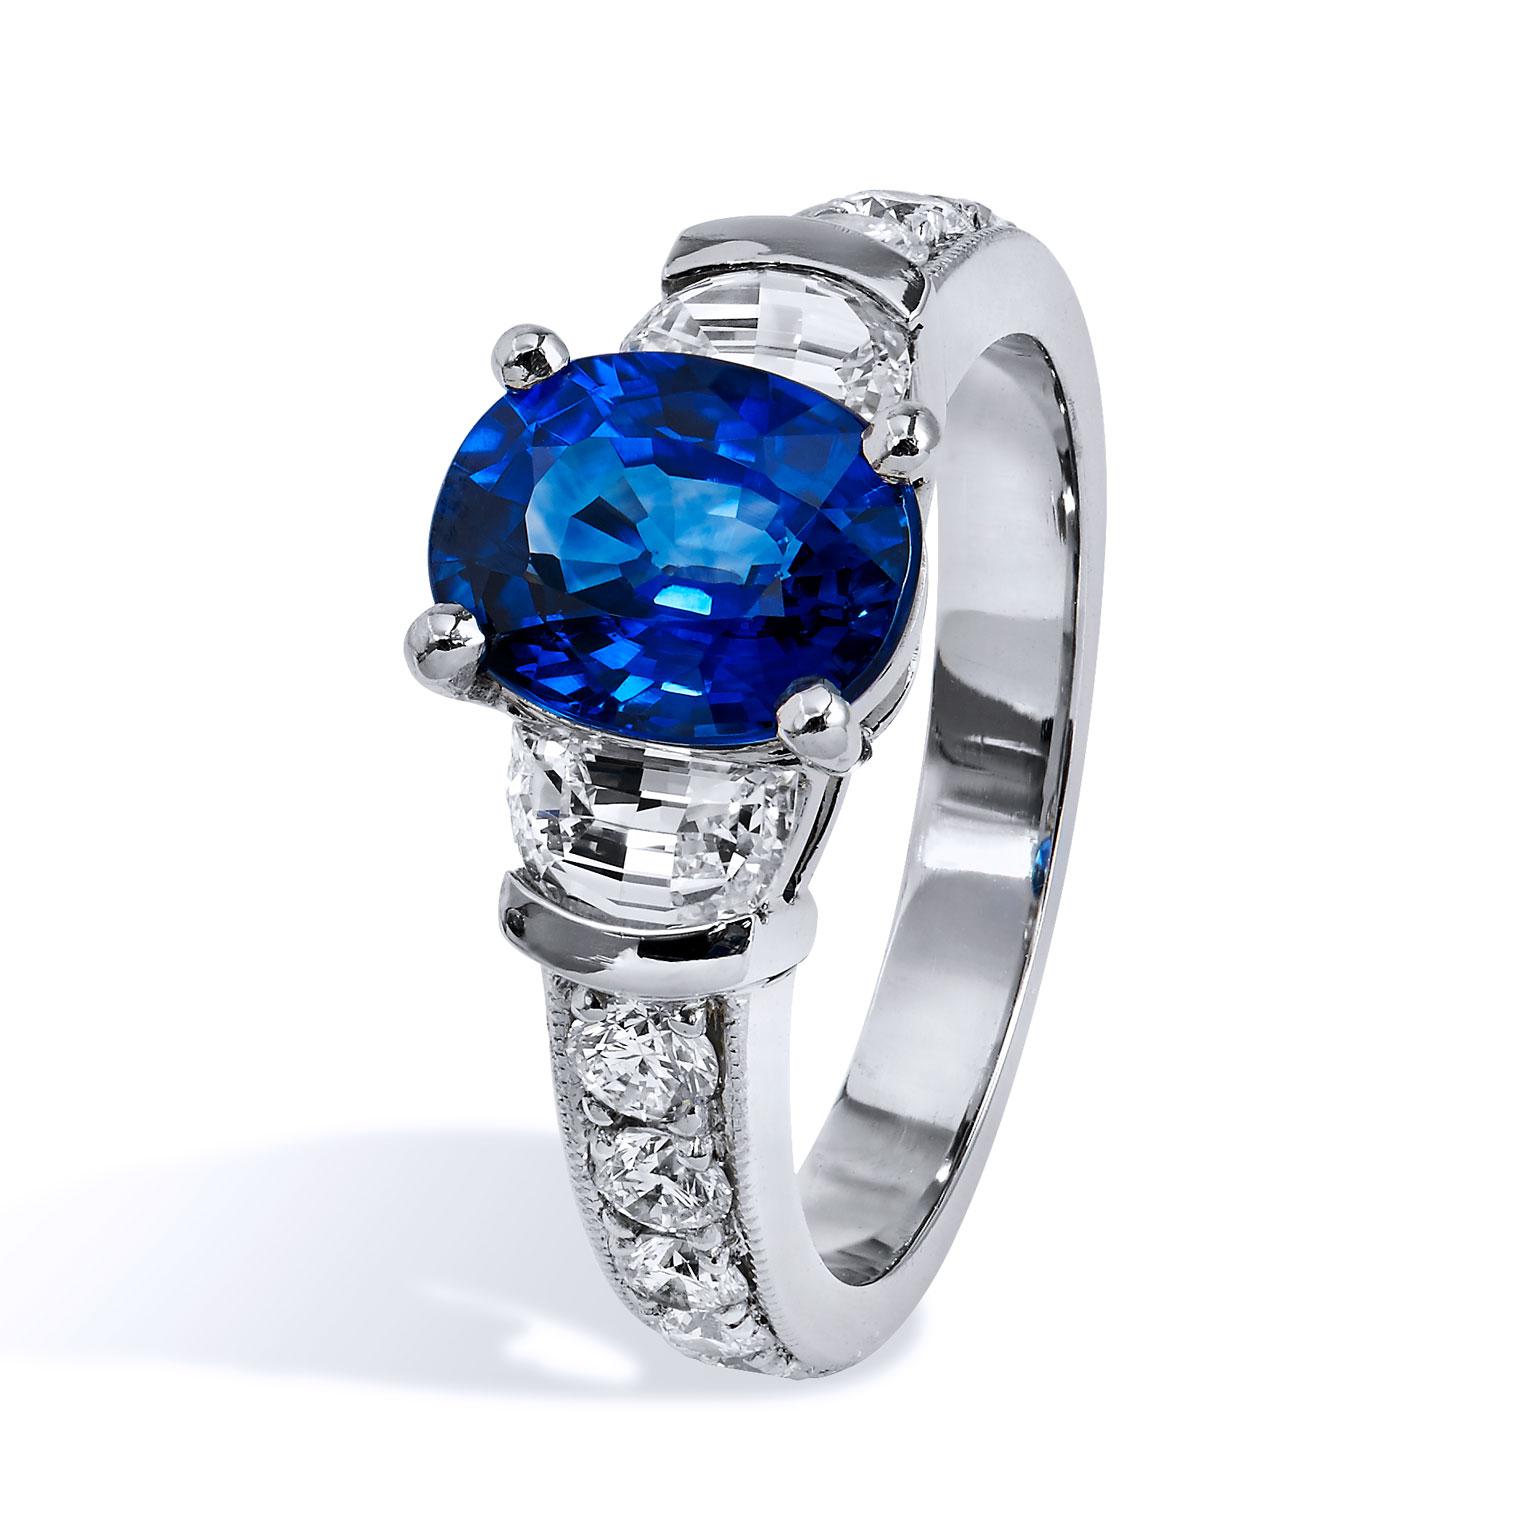 Oval Cut GIA Certified 2.45 Carat Blue Sapphire Diamond Ring Handmade